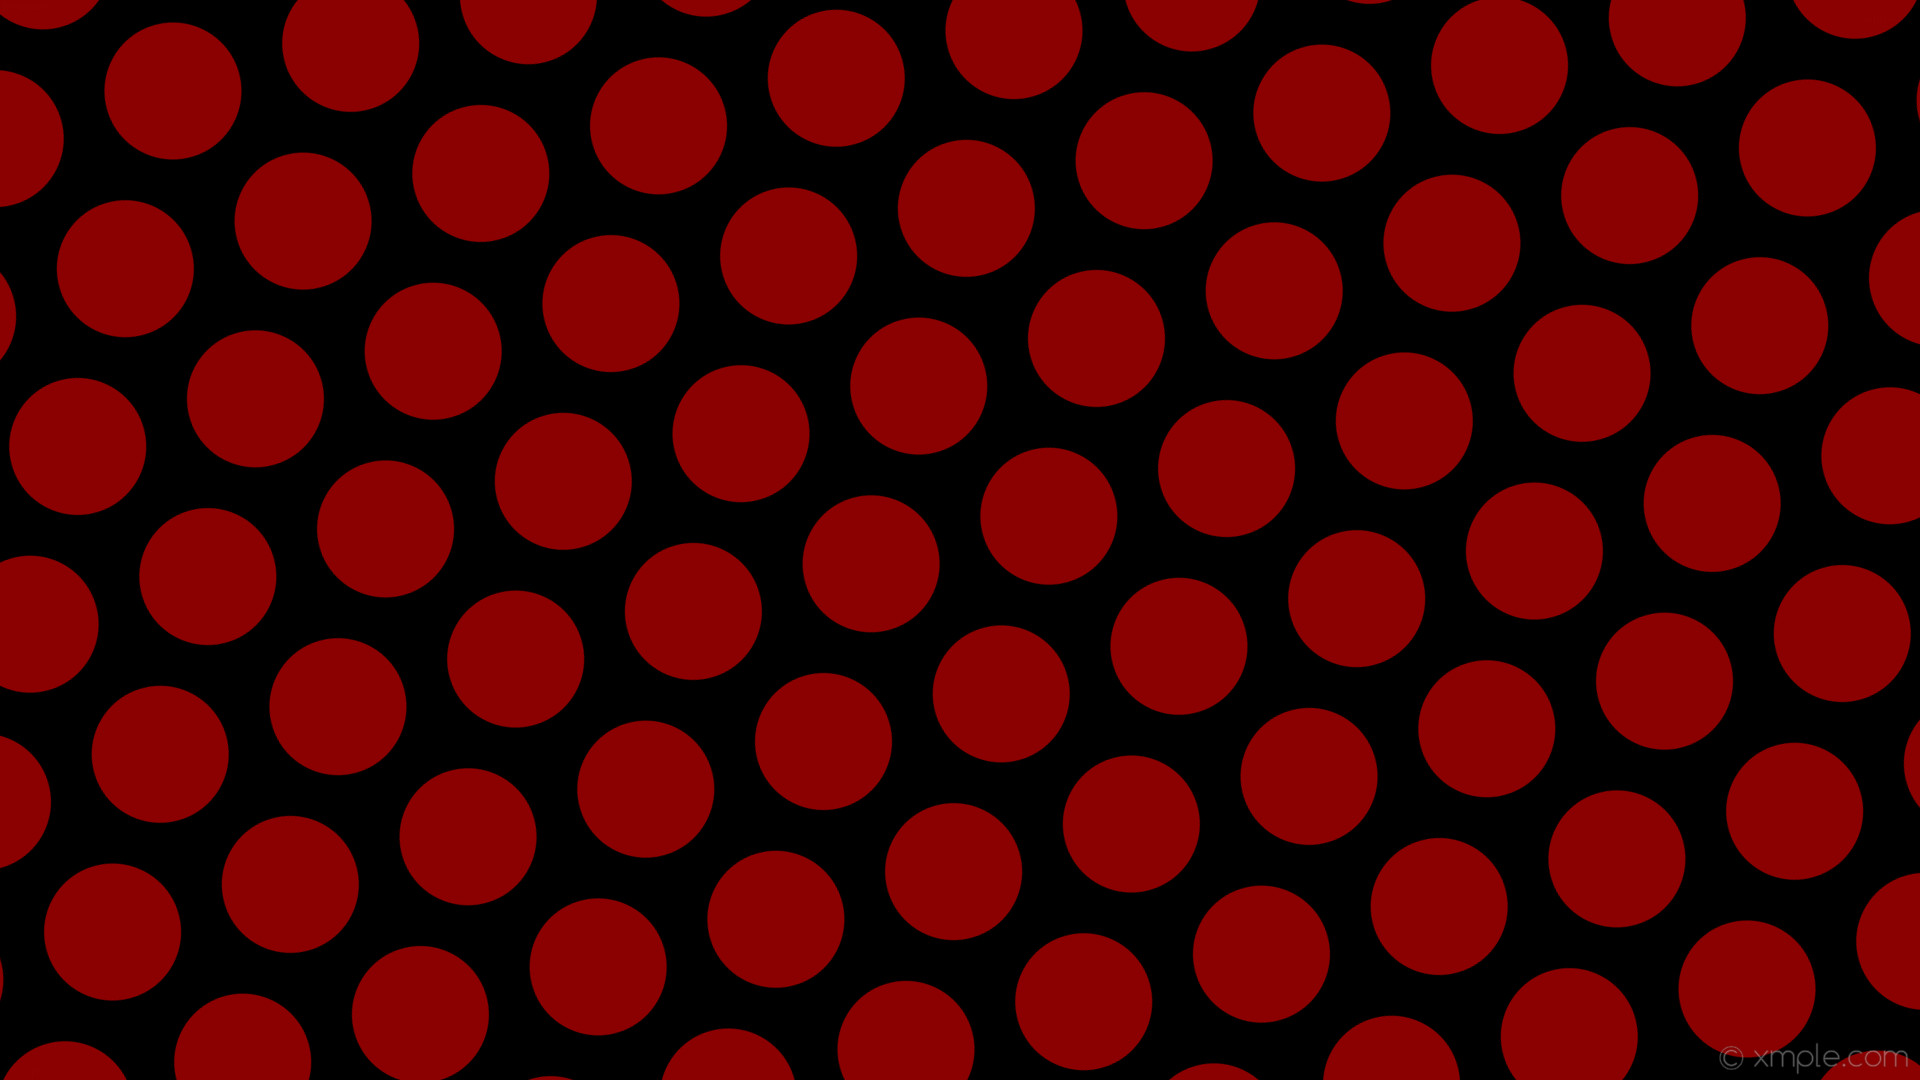 Wallpaper hexagon black red polka dots dark red b0000 diagonal 15 137px